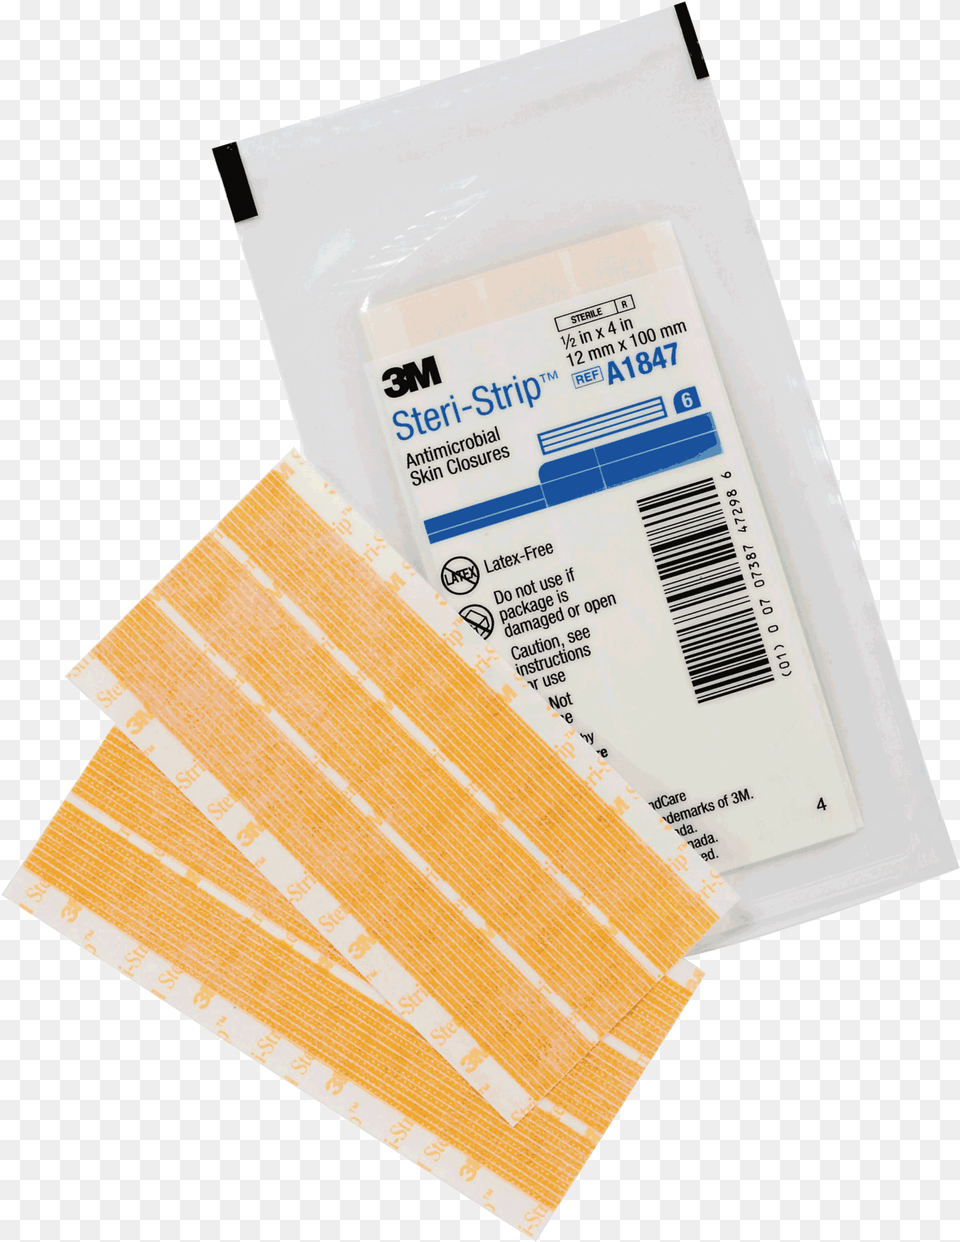 Steri Strip Antimicrobial Skin Closure Strip 18quot X 3m Wound Closure Strip, Business Card, Paper, Text Png